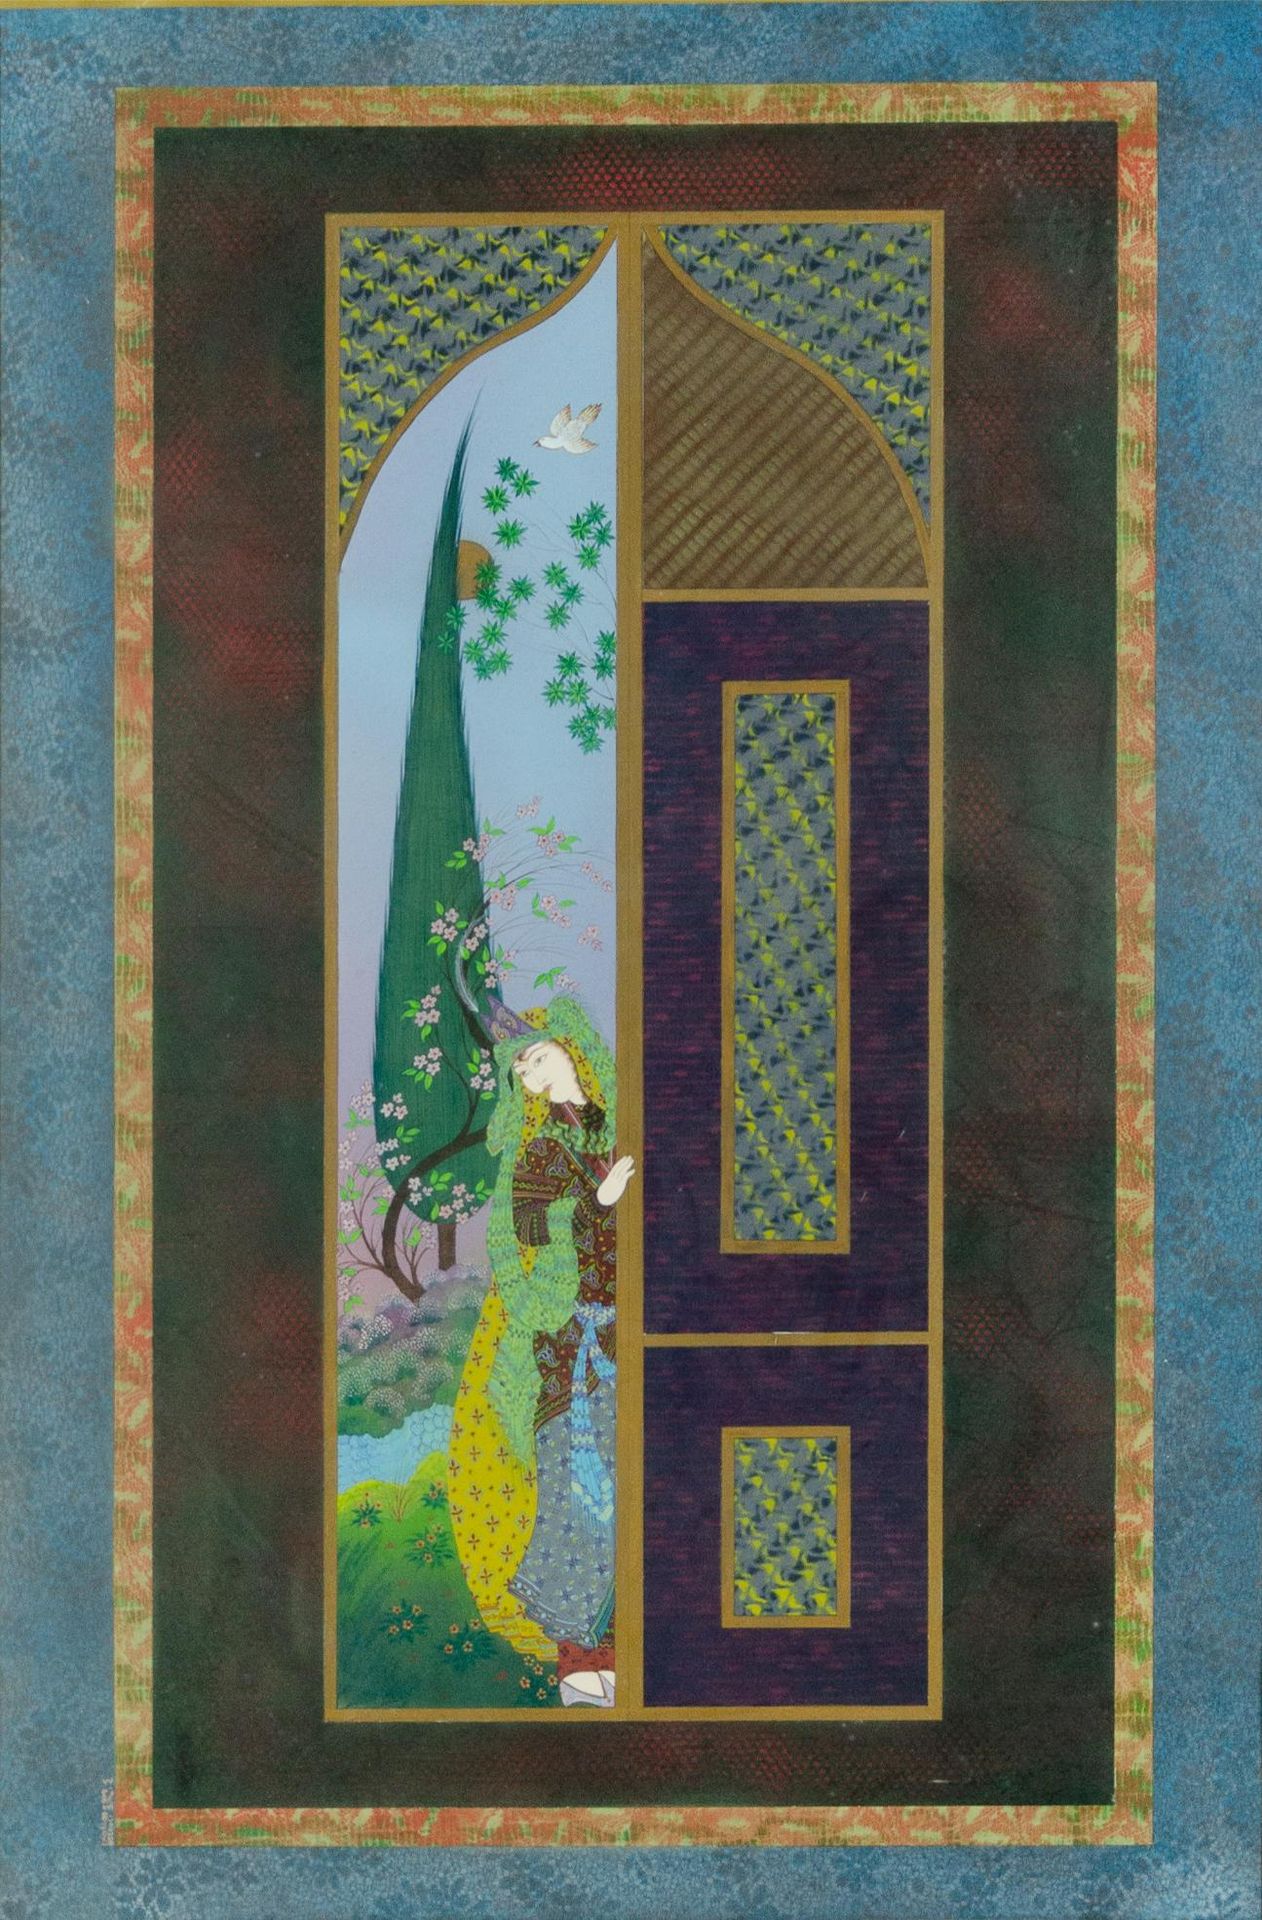 Farah OSSOULI (Iranian) - Four Seasons (Hope) Farah OSSOULI
Iranerin, geb. 1953
&hellip;